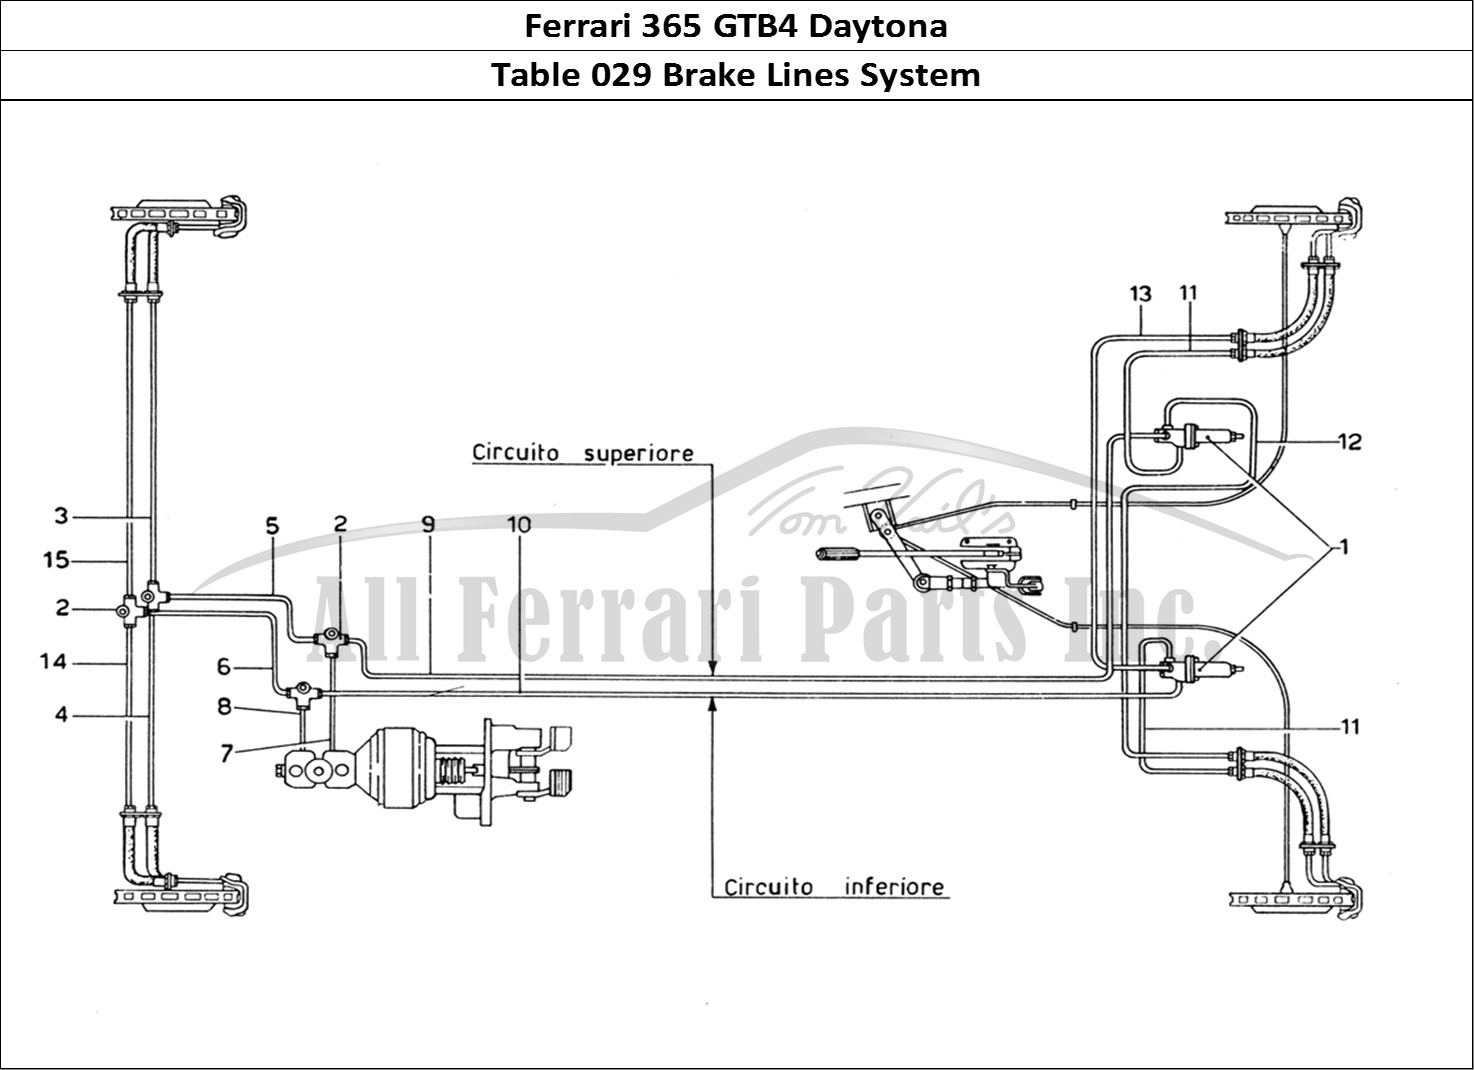 Ferrari Parts Ferrari 365 GTB4 Daytona (1969) Page 029 Brake Lines System